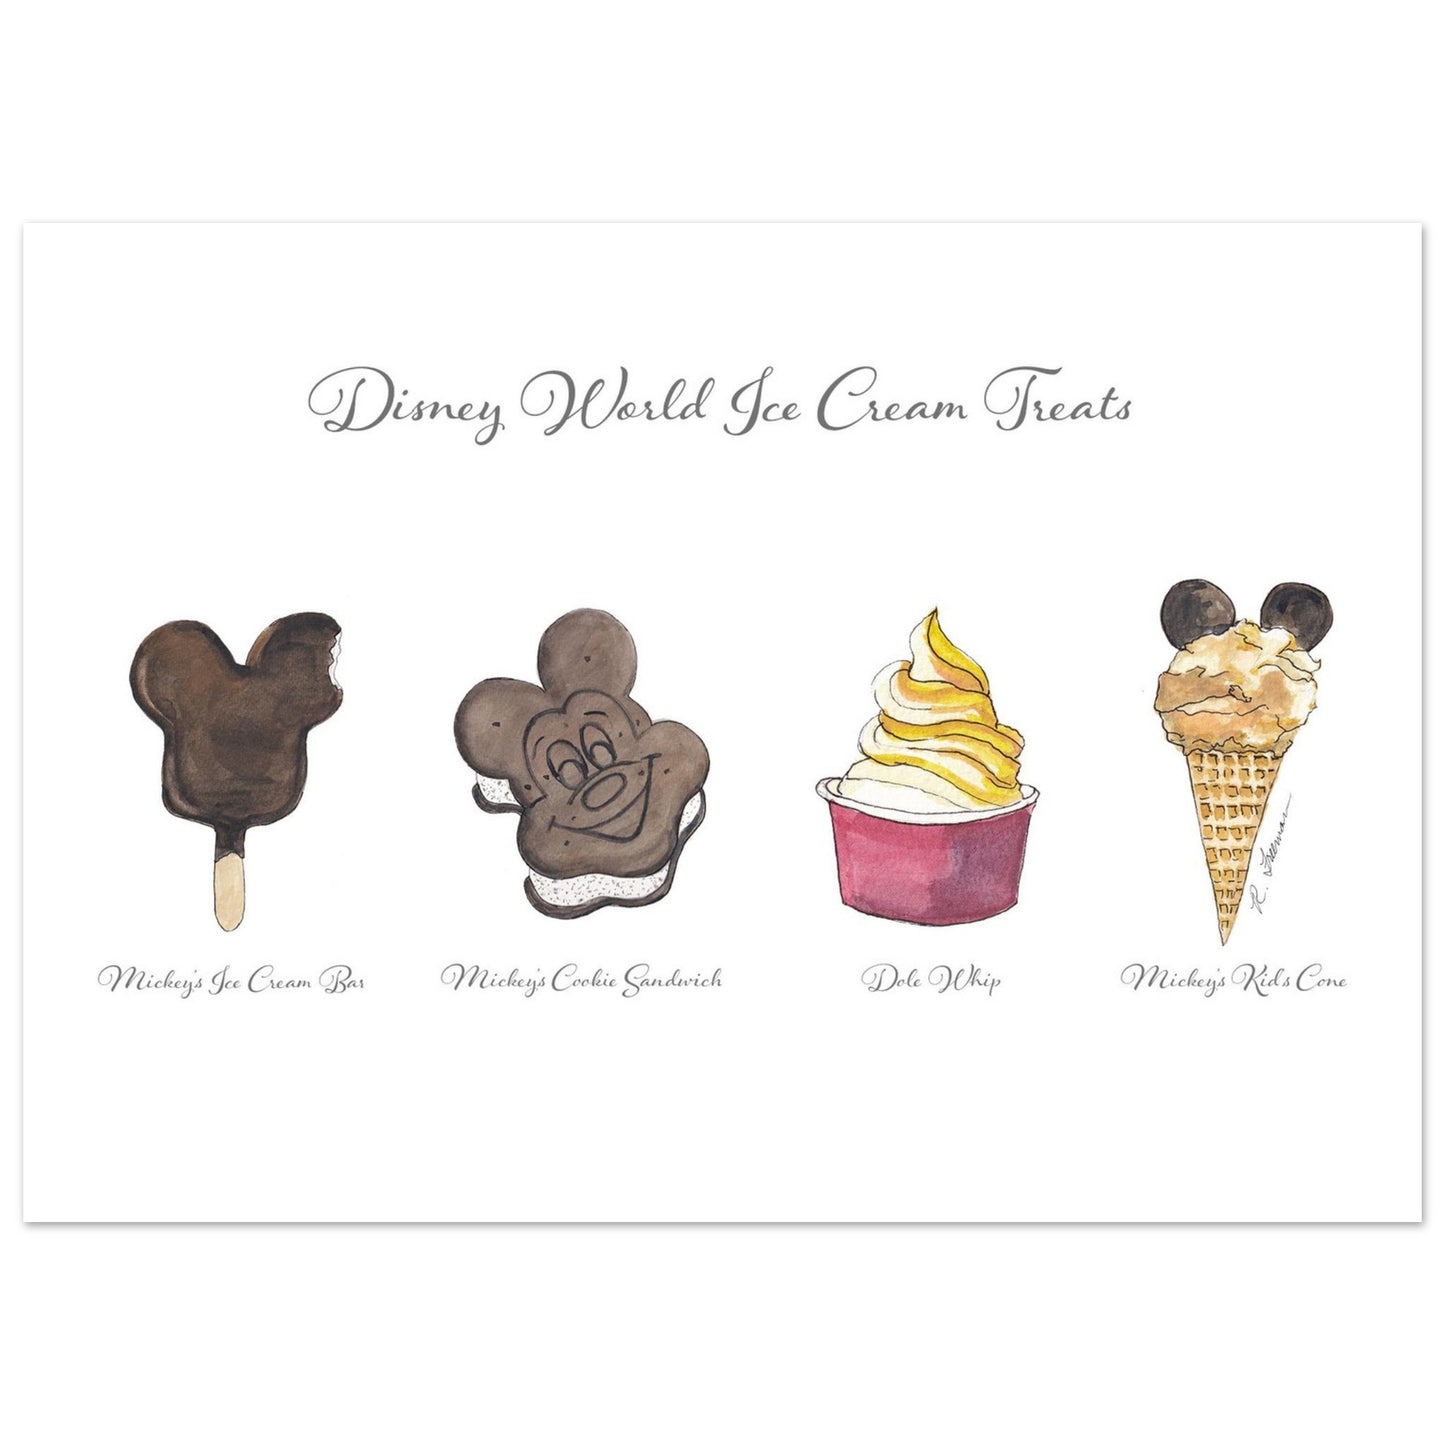 Disney World Ice Cream Treats - 20" x 28" Poster Print